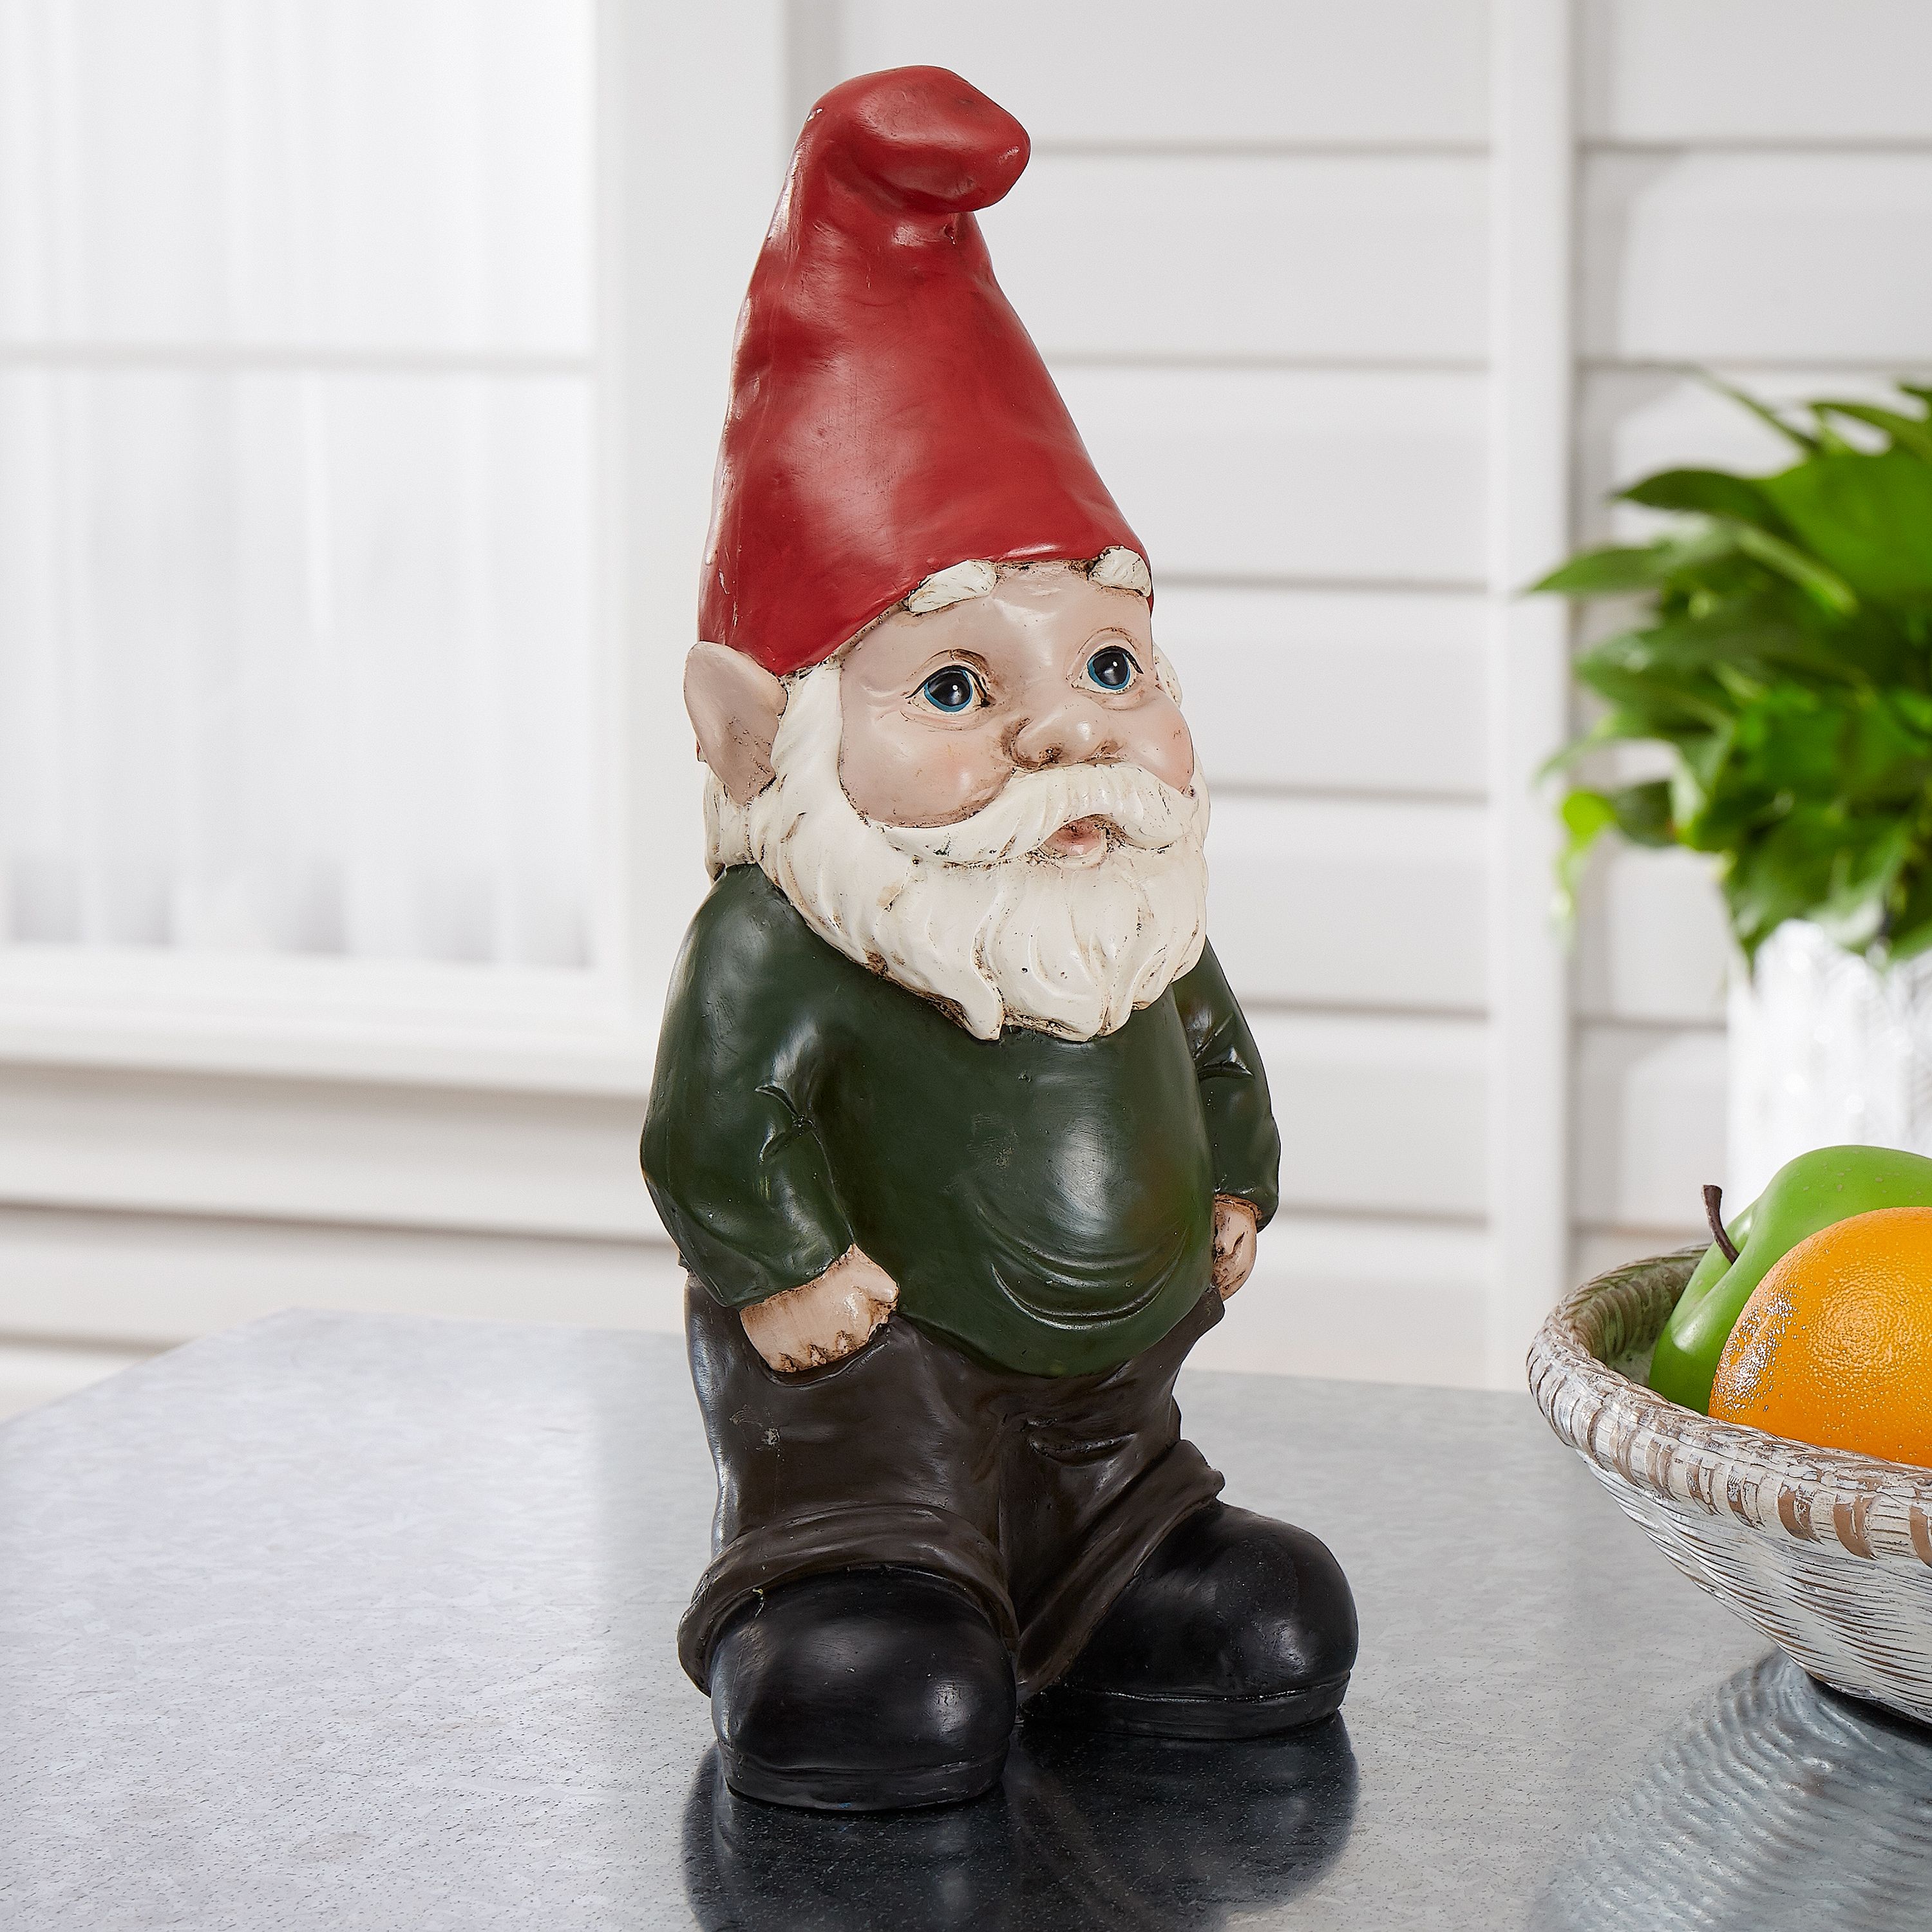 Mainstays Garden Gnome Statue with Red Cap - Walmart.com